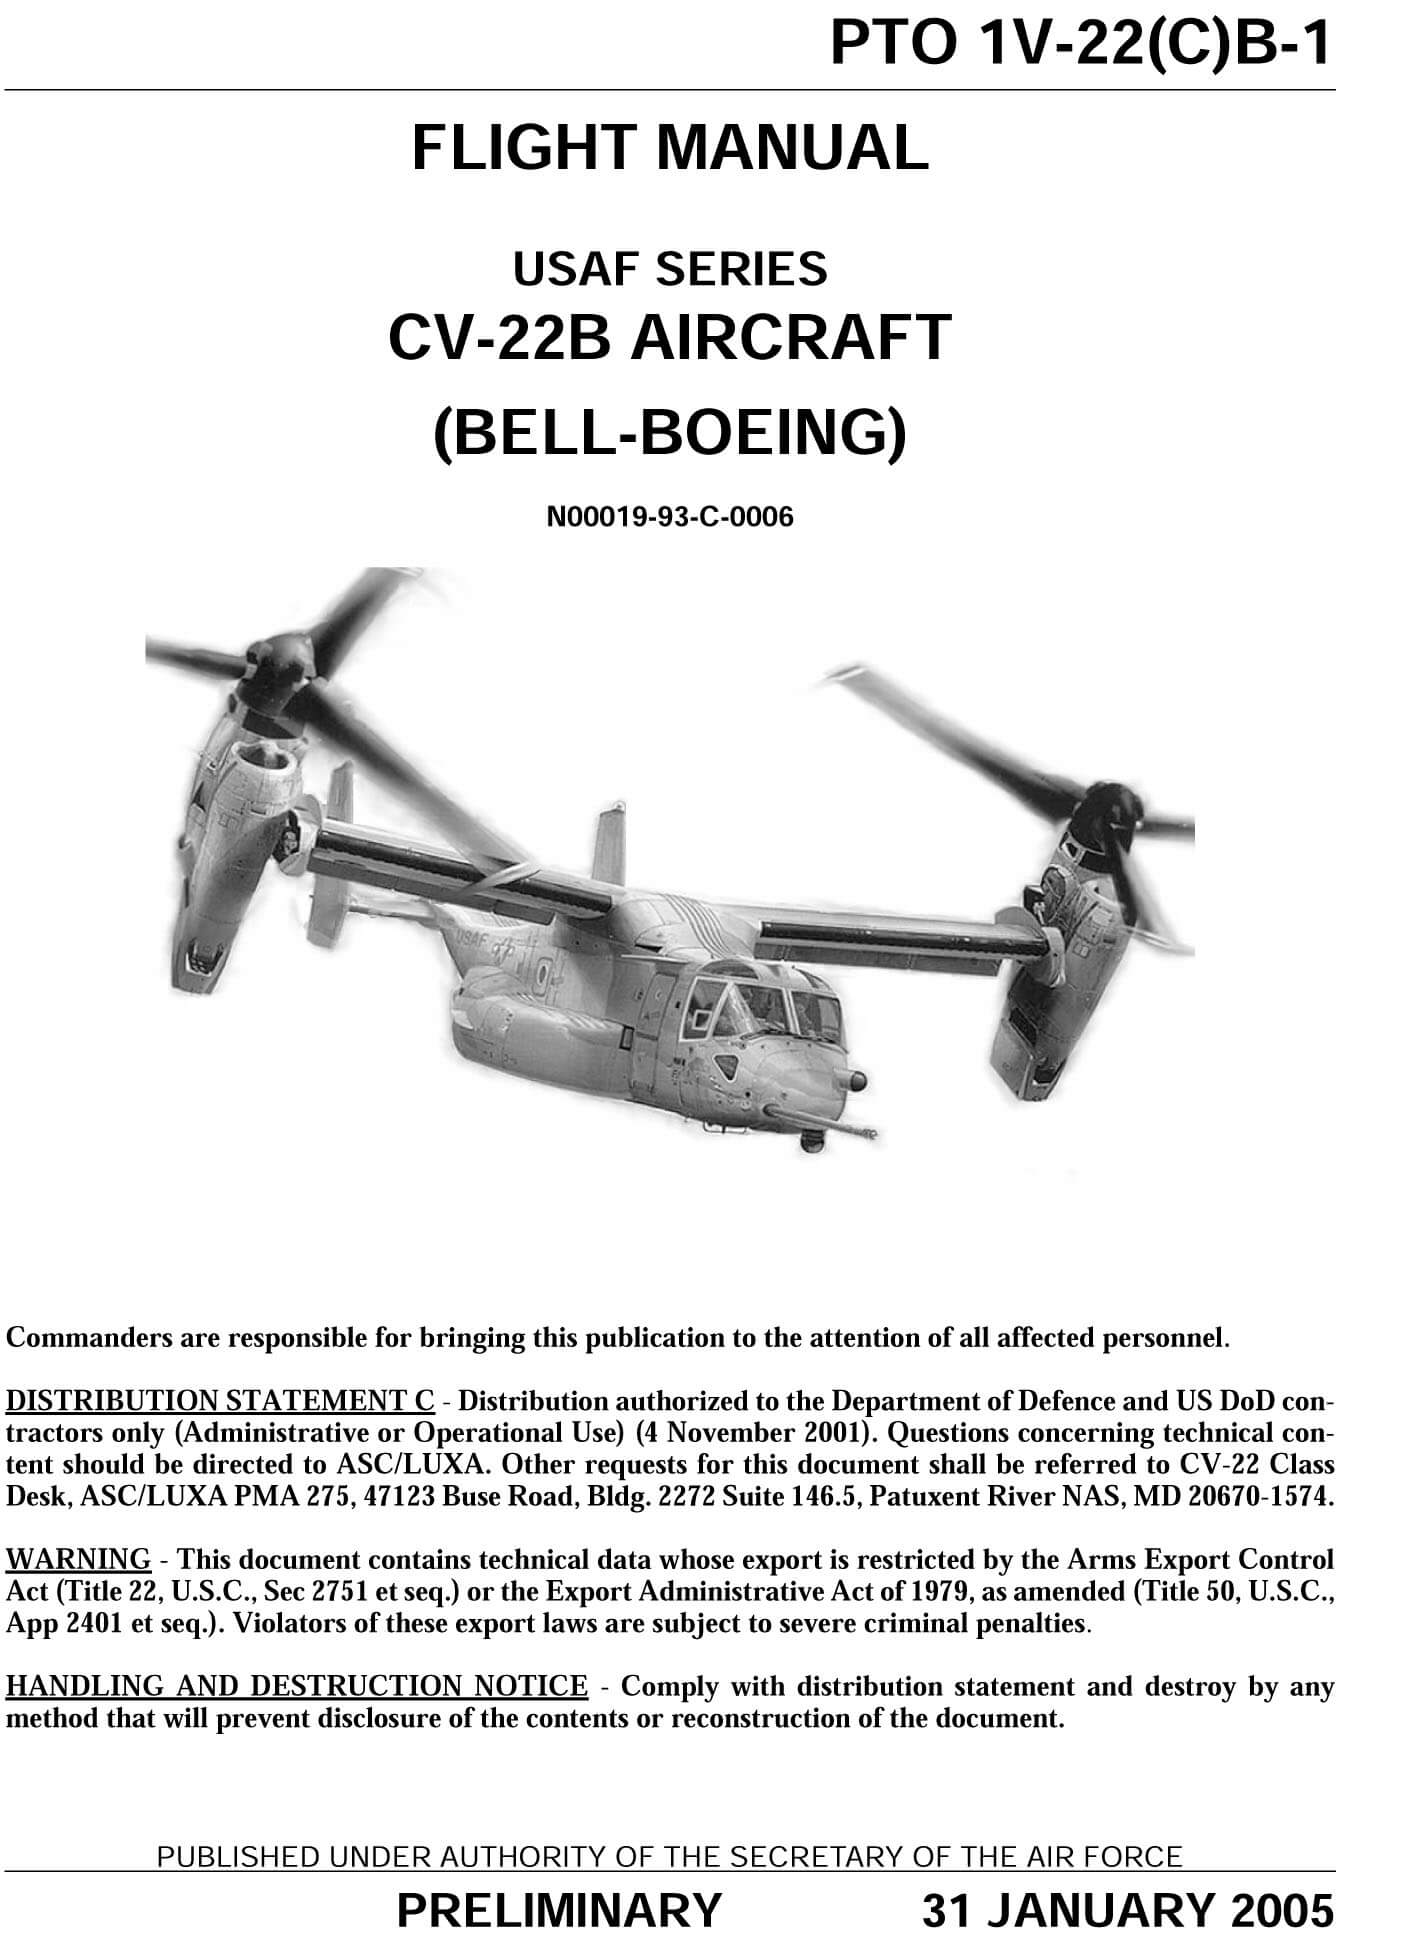 Free V 22 Osprey Natops Manual